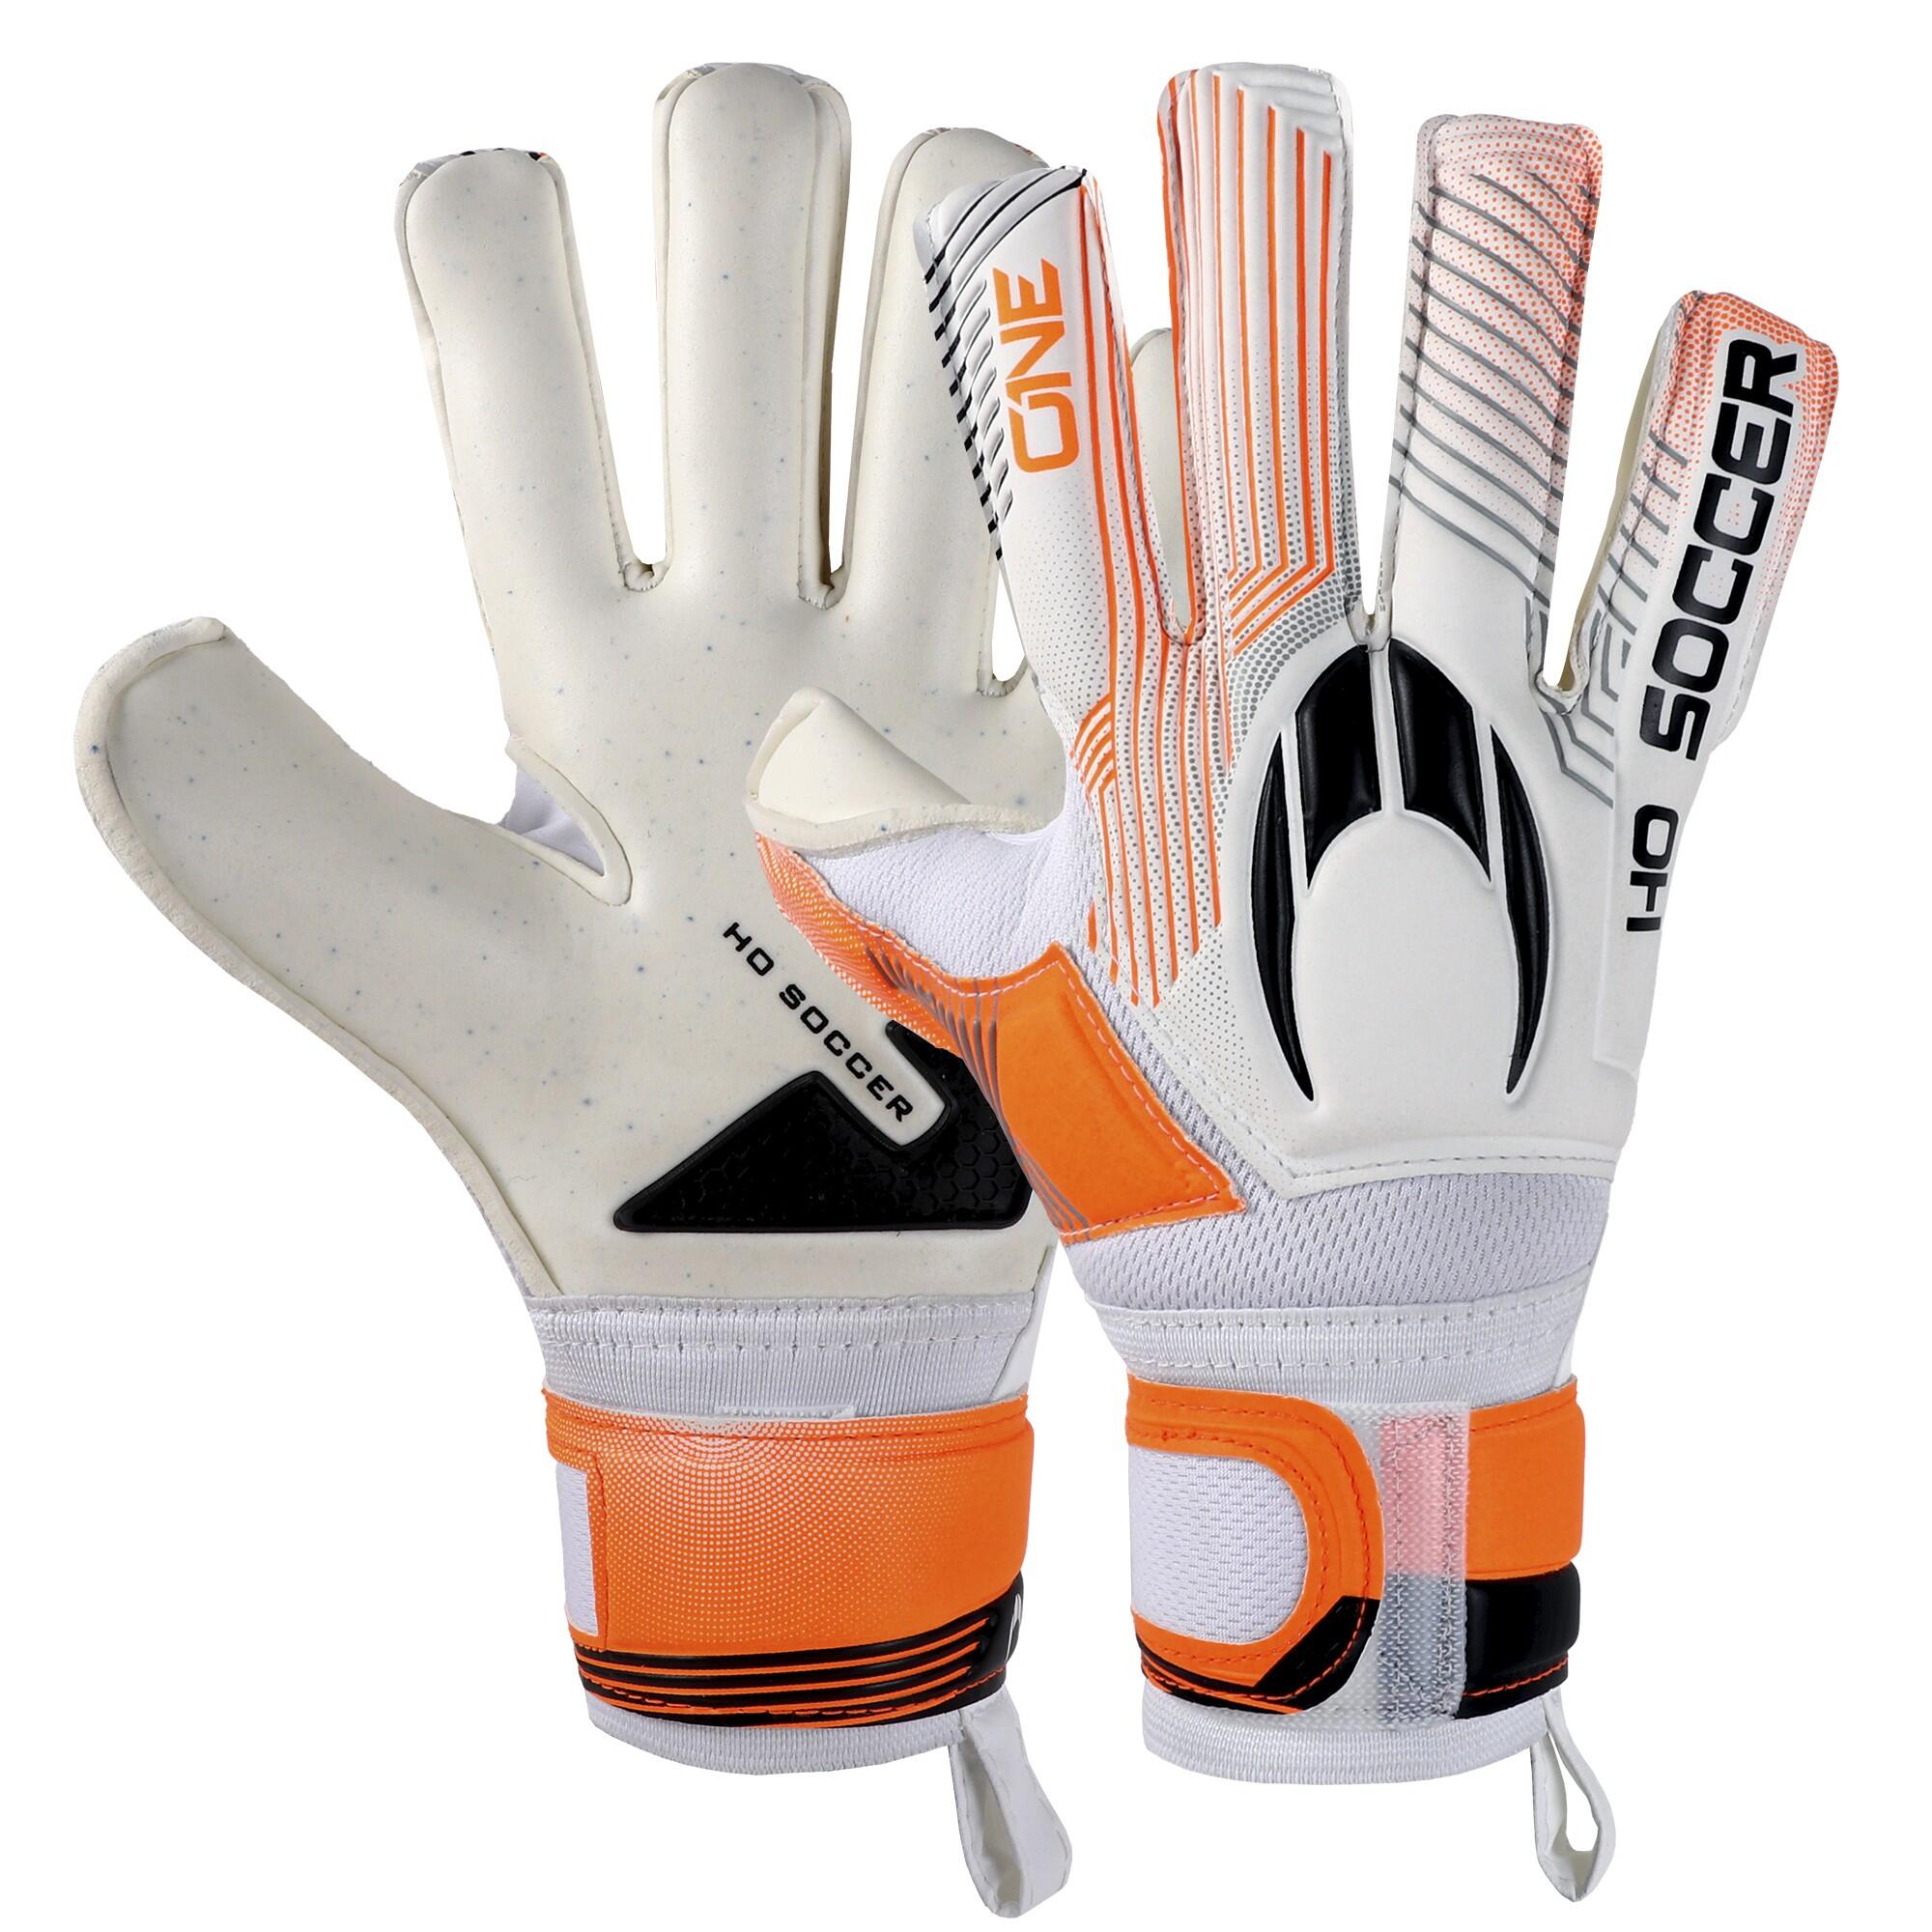 HO Soccer One Negative (5mm all surface)   Goalkeeper Gloves 1/5